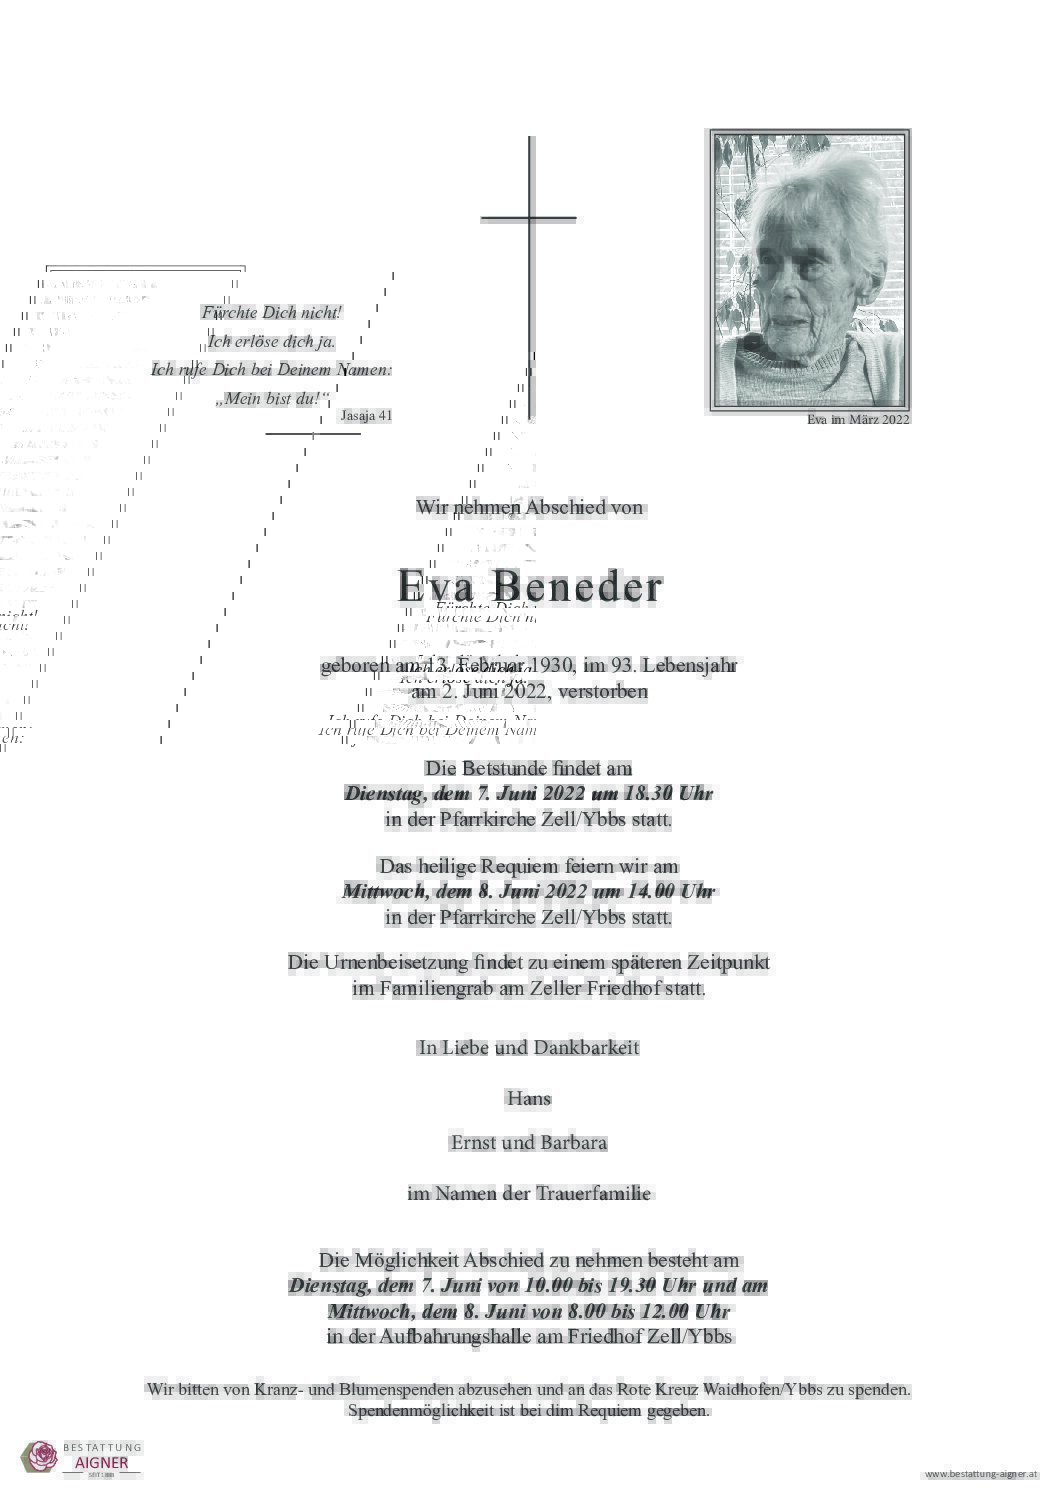 Eva Beneder